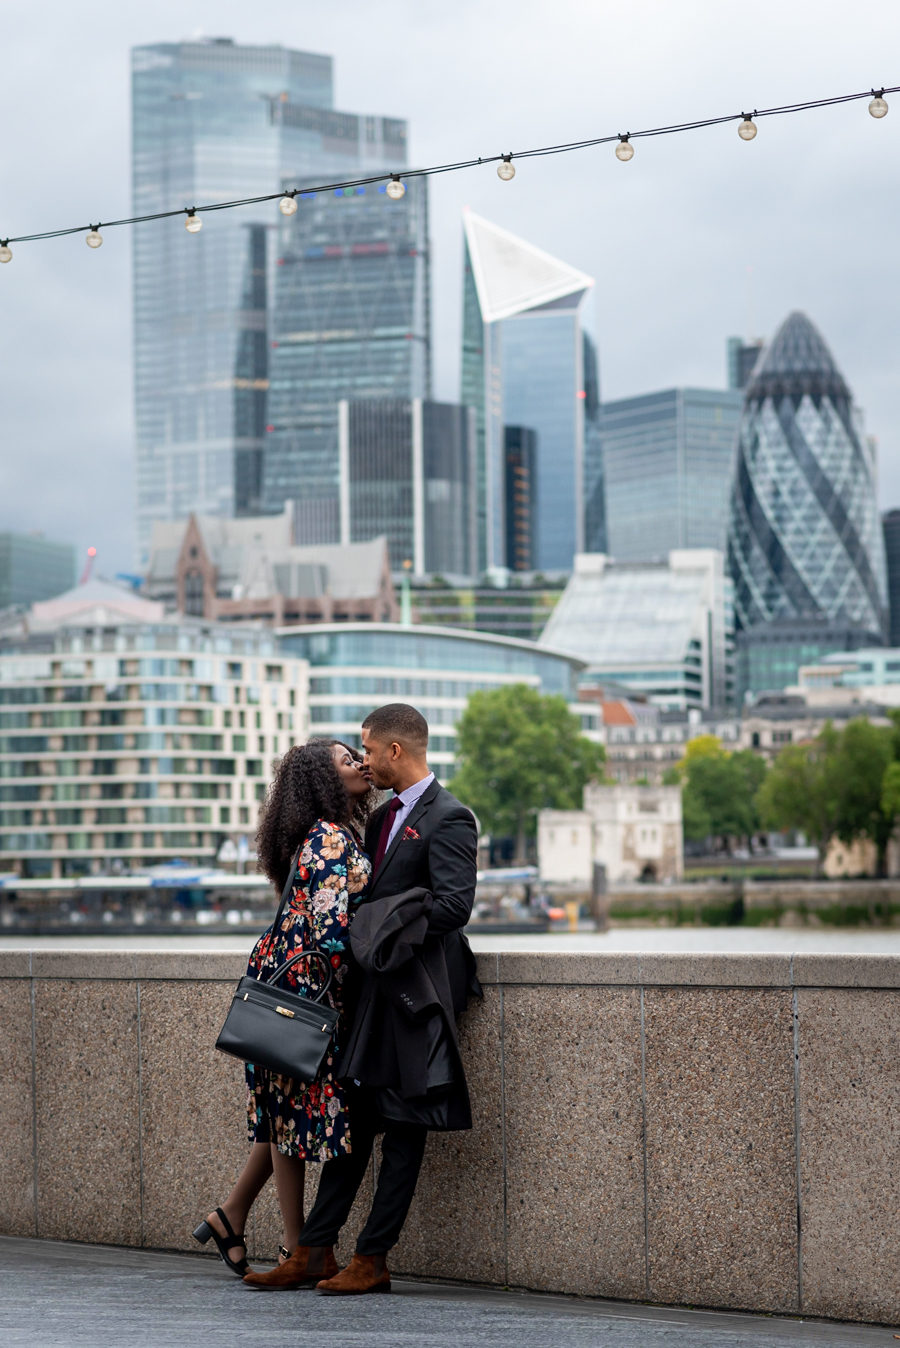 Akinwale & Oluwaseun's dream proposal in London, captured on camera by Matt Badenoch Photography (6)